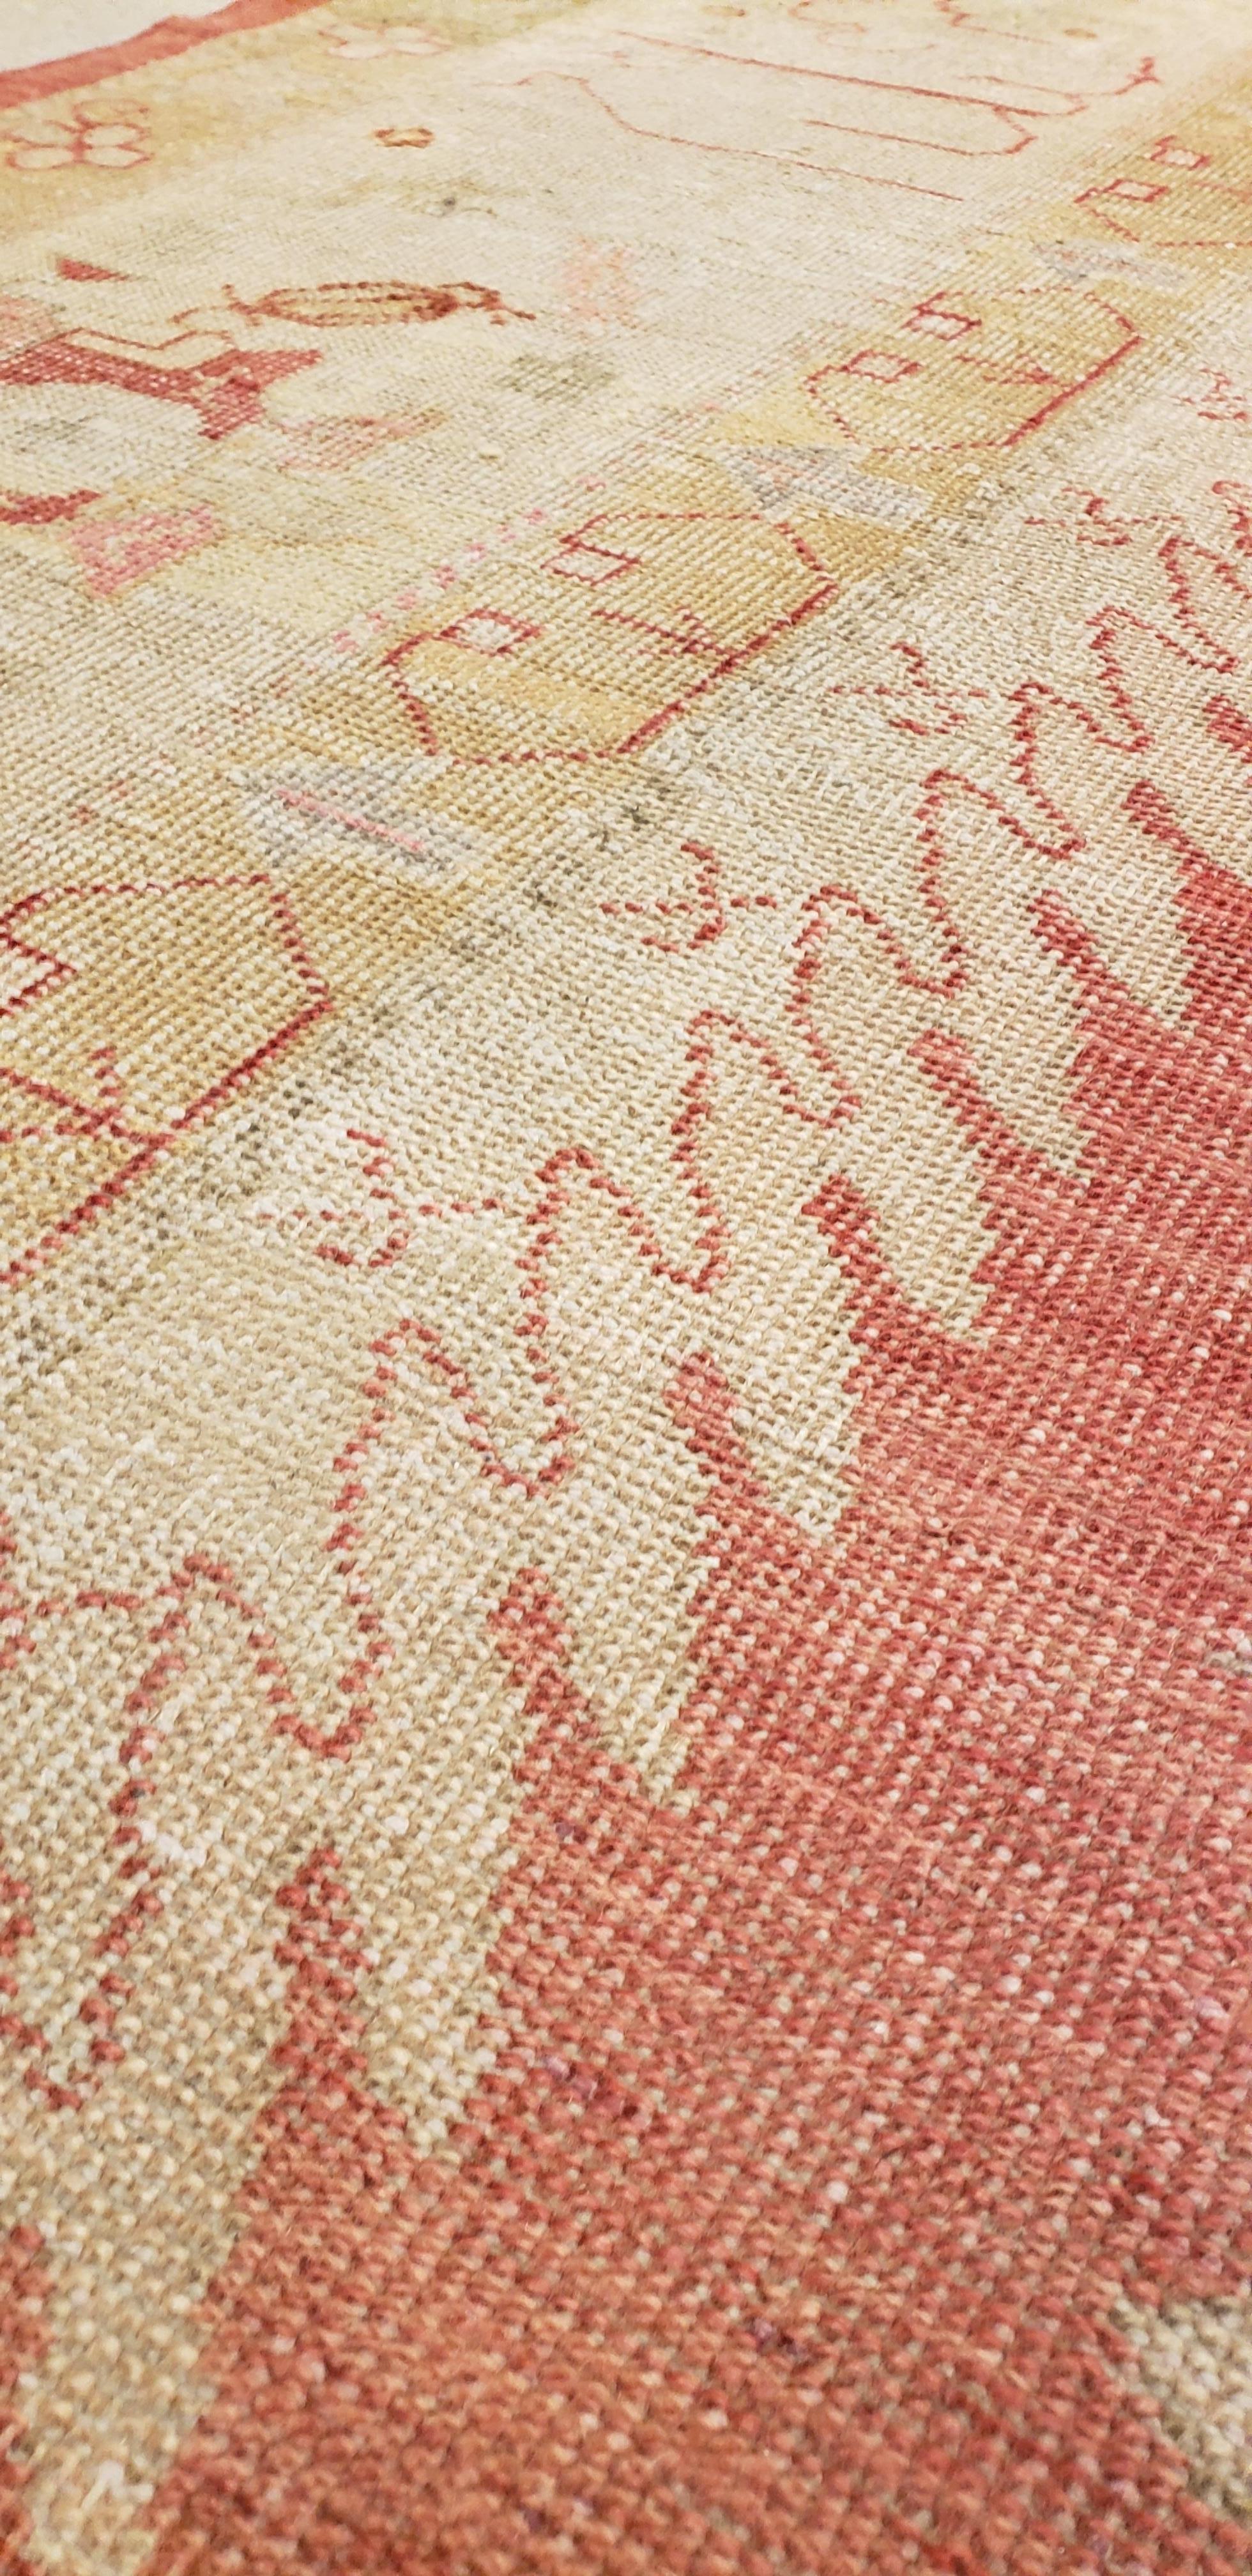 Antique Oushak Carpet, Handmade Turkish Oriental Rug, Beige, Coral, Soft Colors For Sale 6